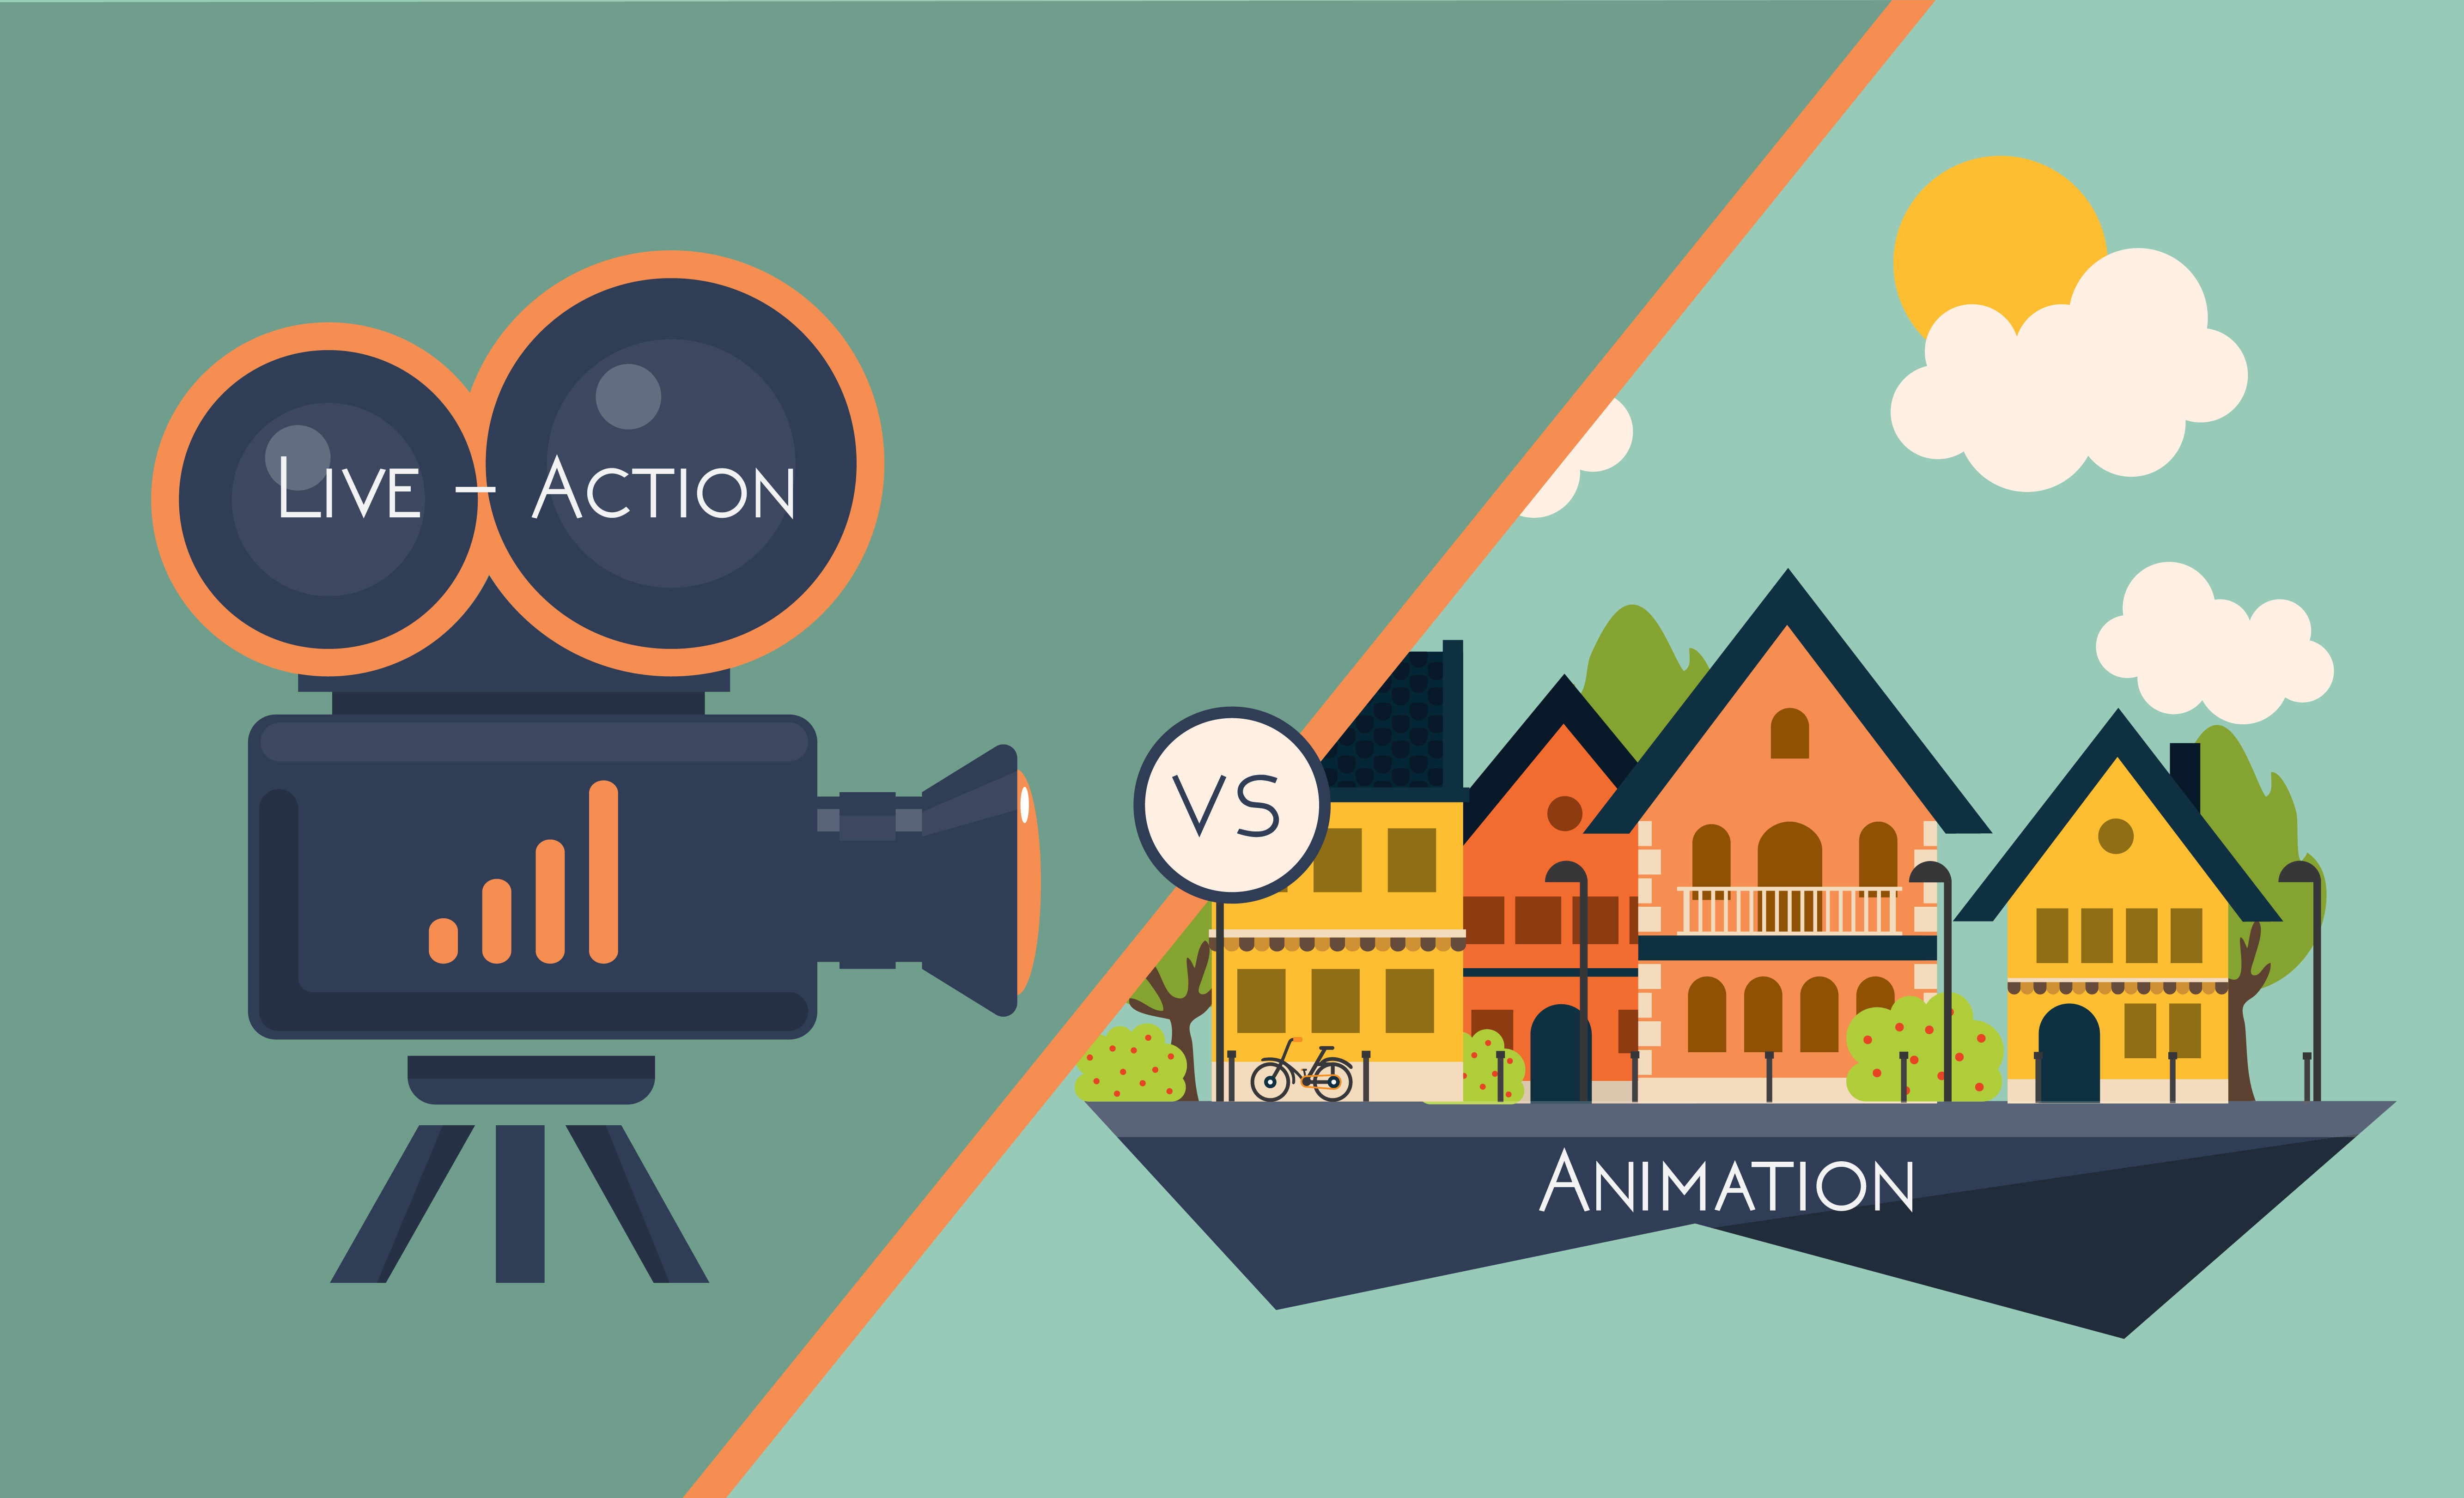 Animation process. Animation vs Live Action. Animation Editor. Animation vs animation. Animation edits